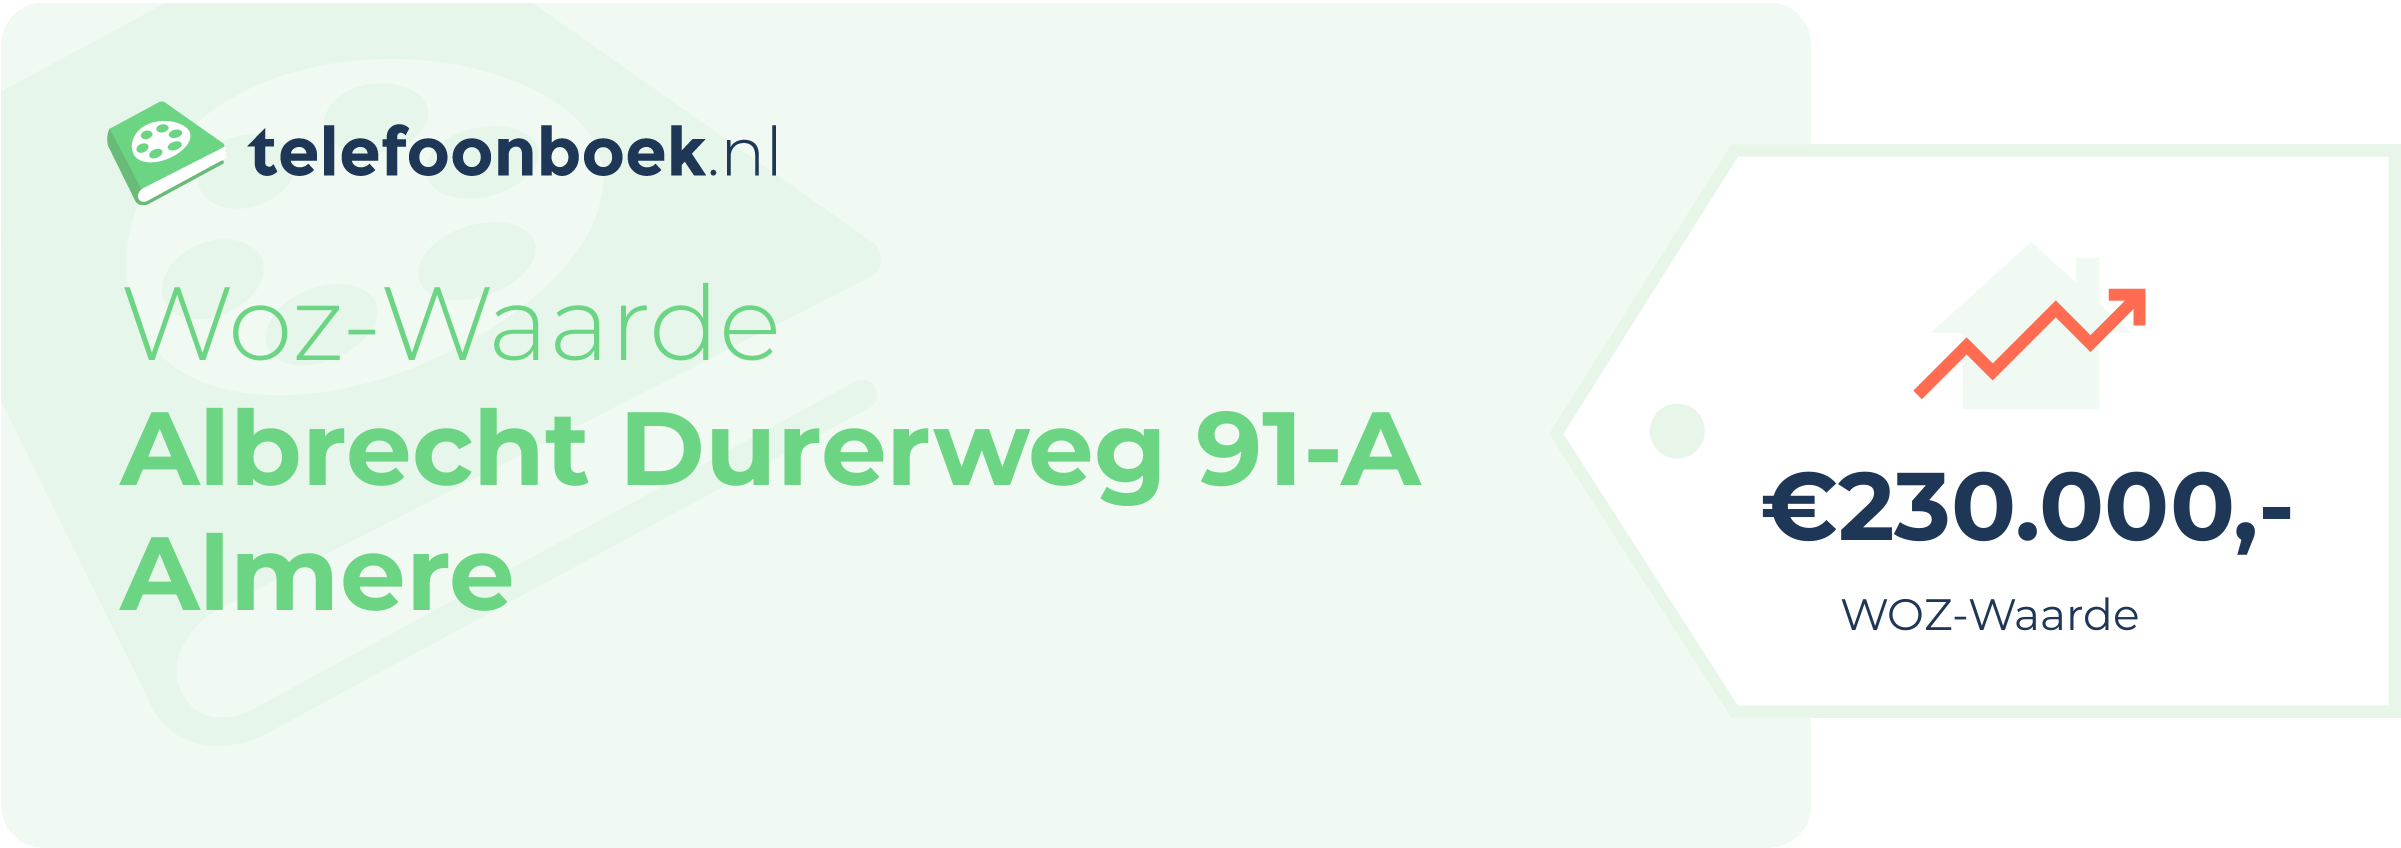 WOZ-waarde Albrecht Durerweg 91-A Almere